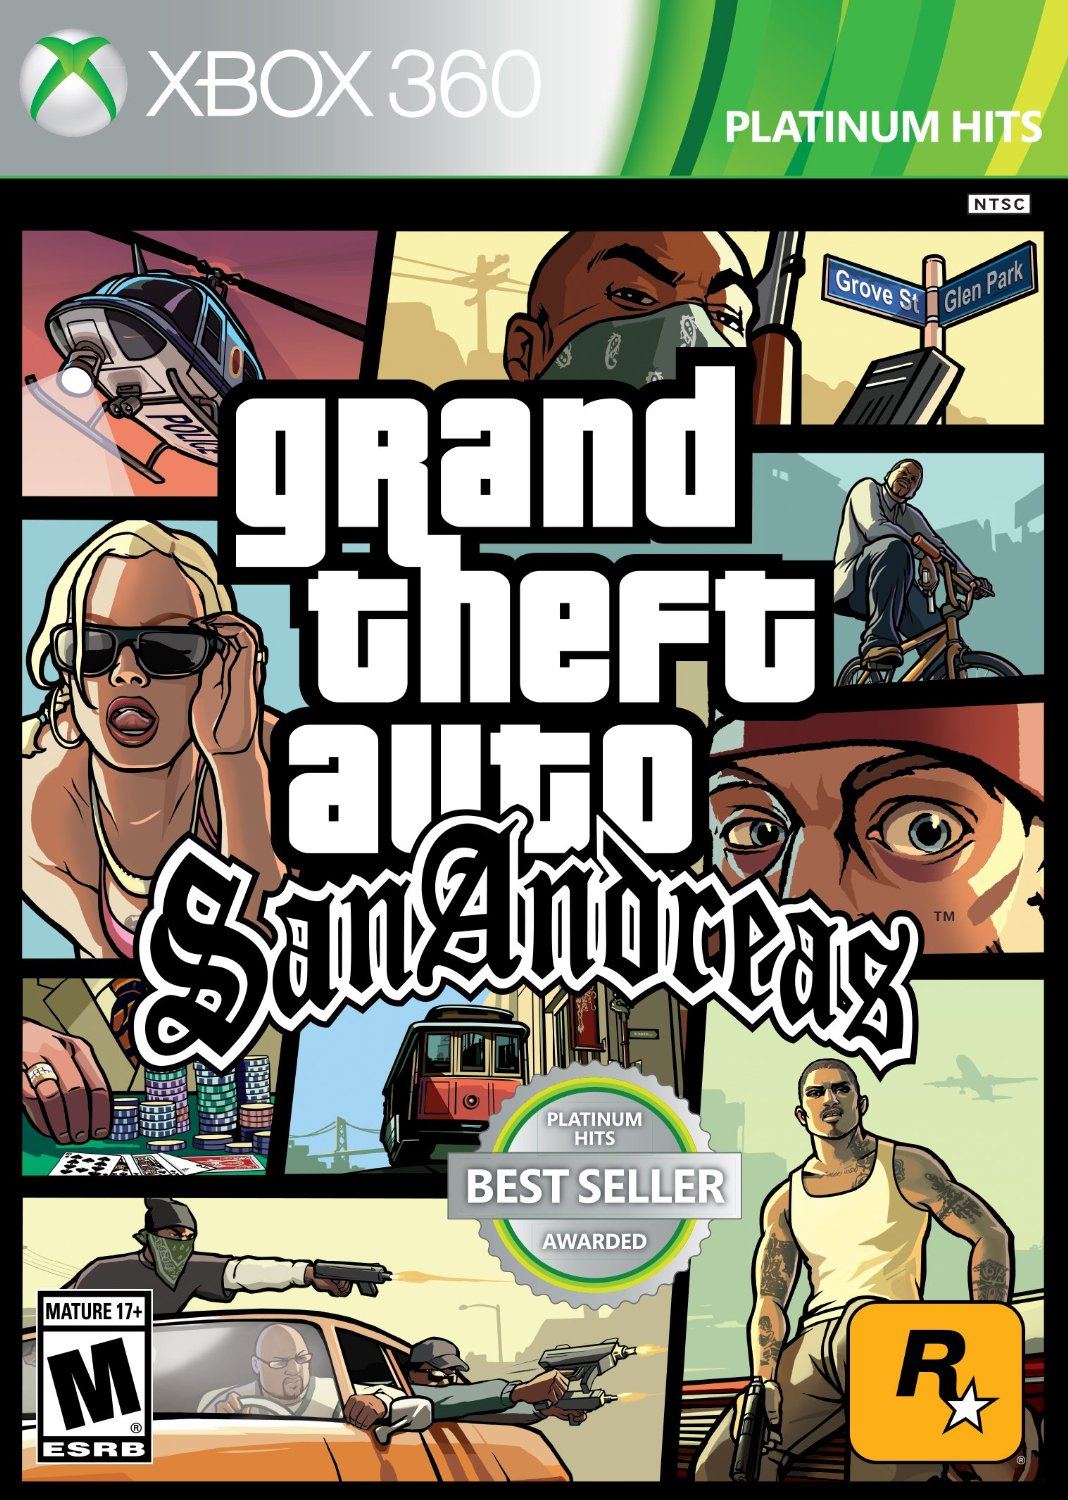 GTA San Andreas (Platinum) - PS2 Uboxing 